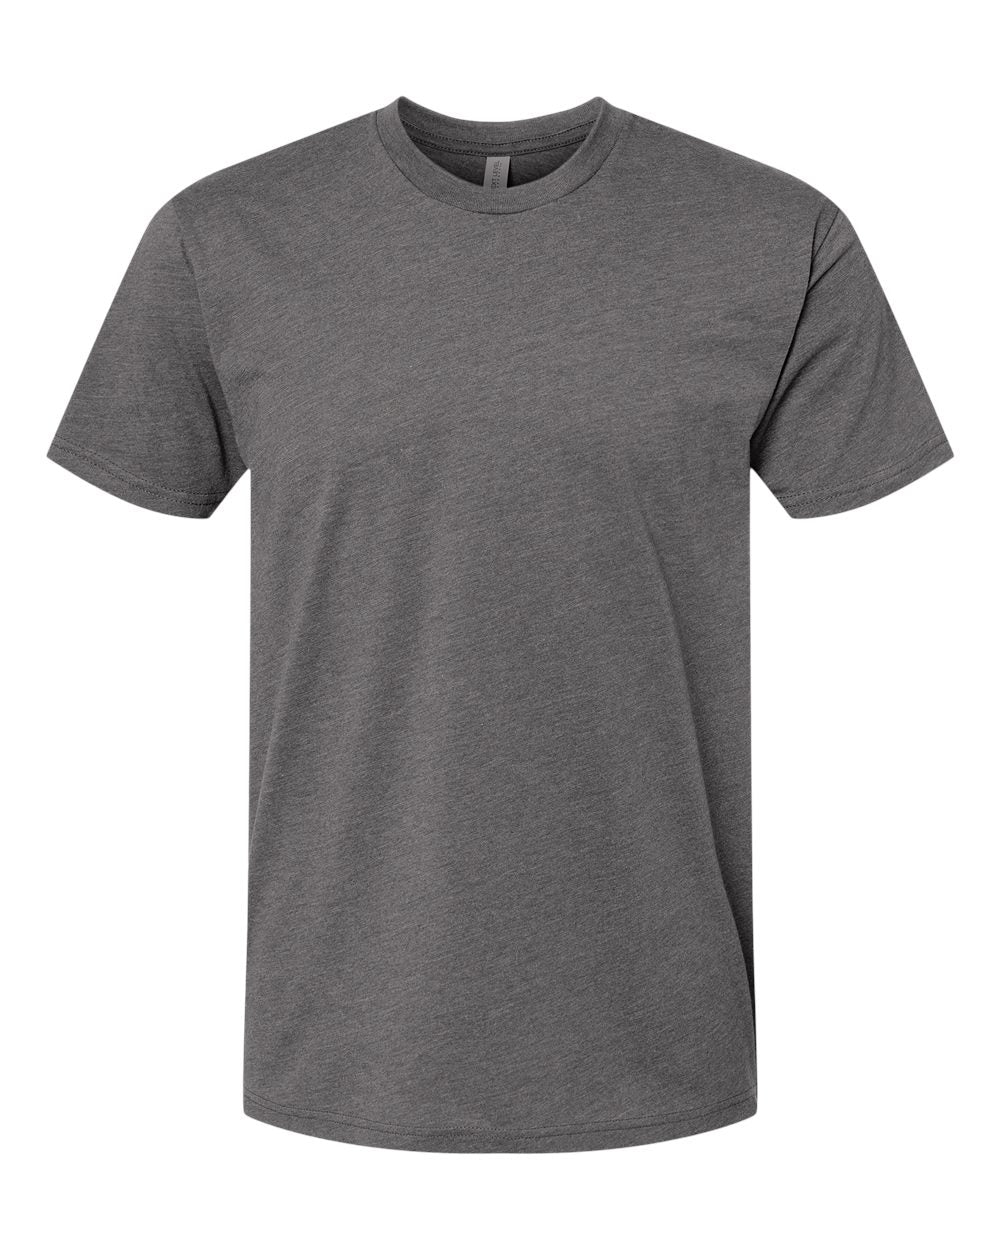 Titan Elite design 2 T-Shirt